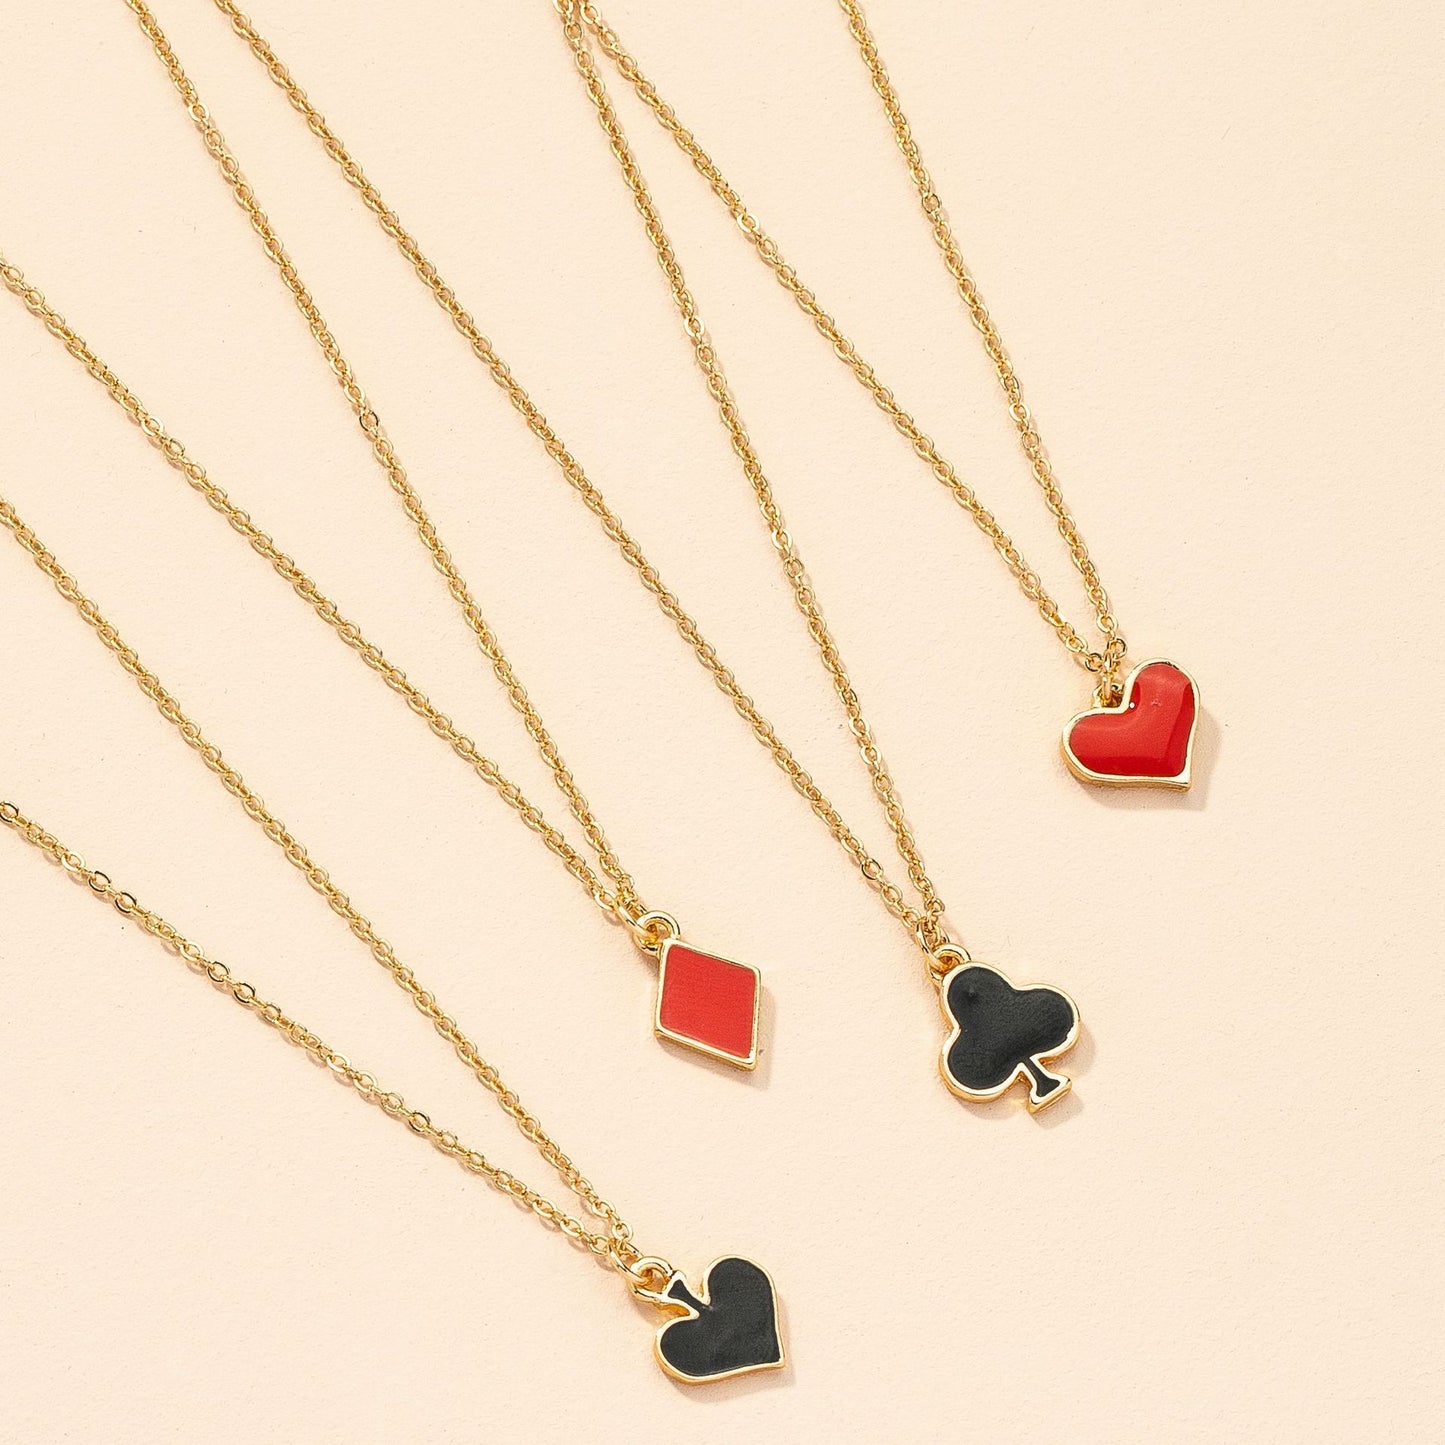 Korean Glazed Poker Necklace Set with Heart-shaped Pendant